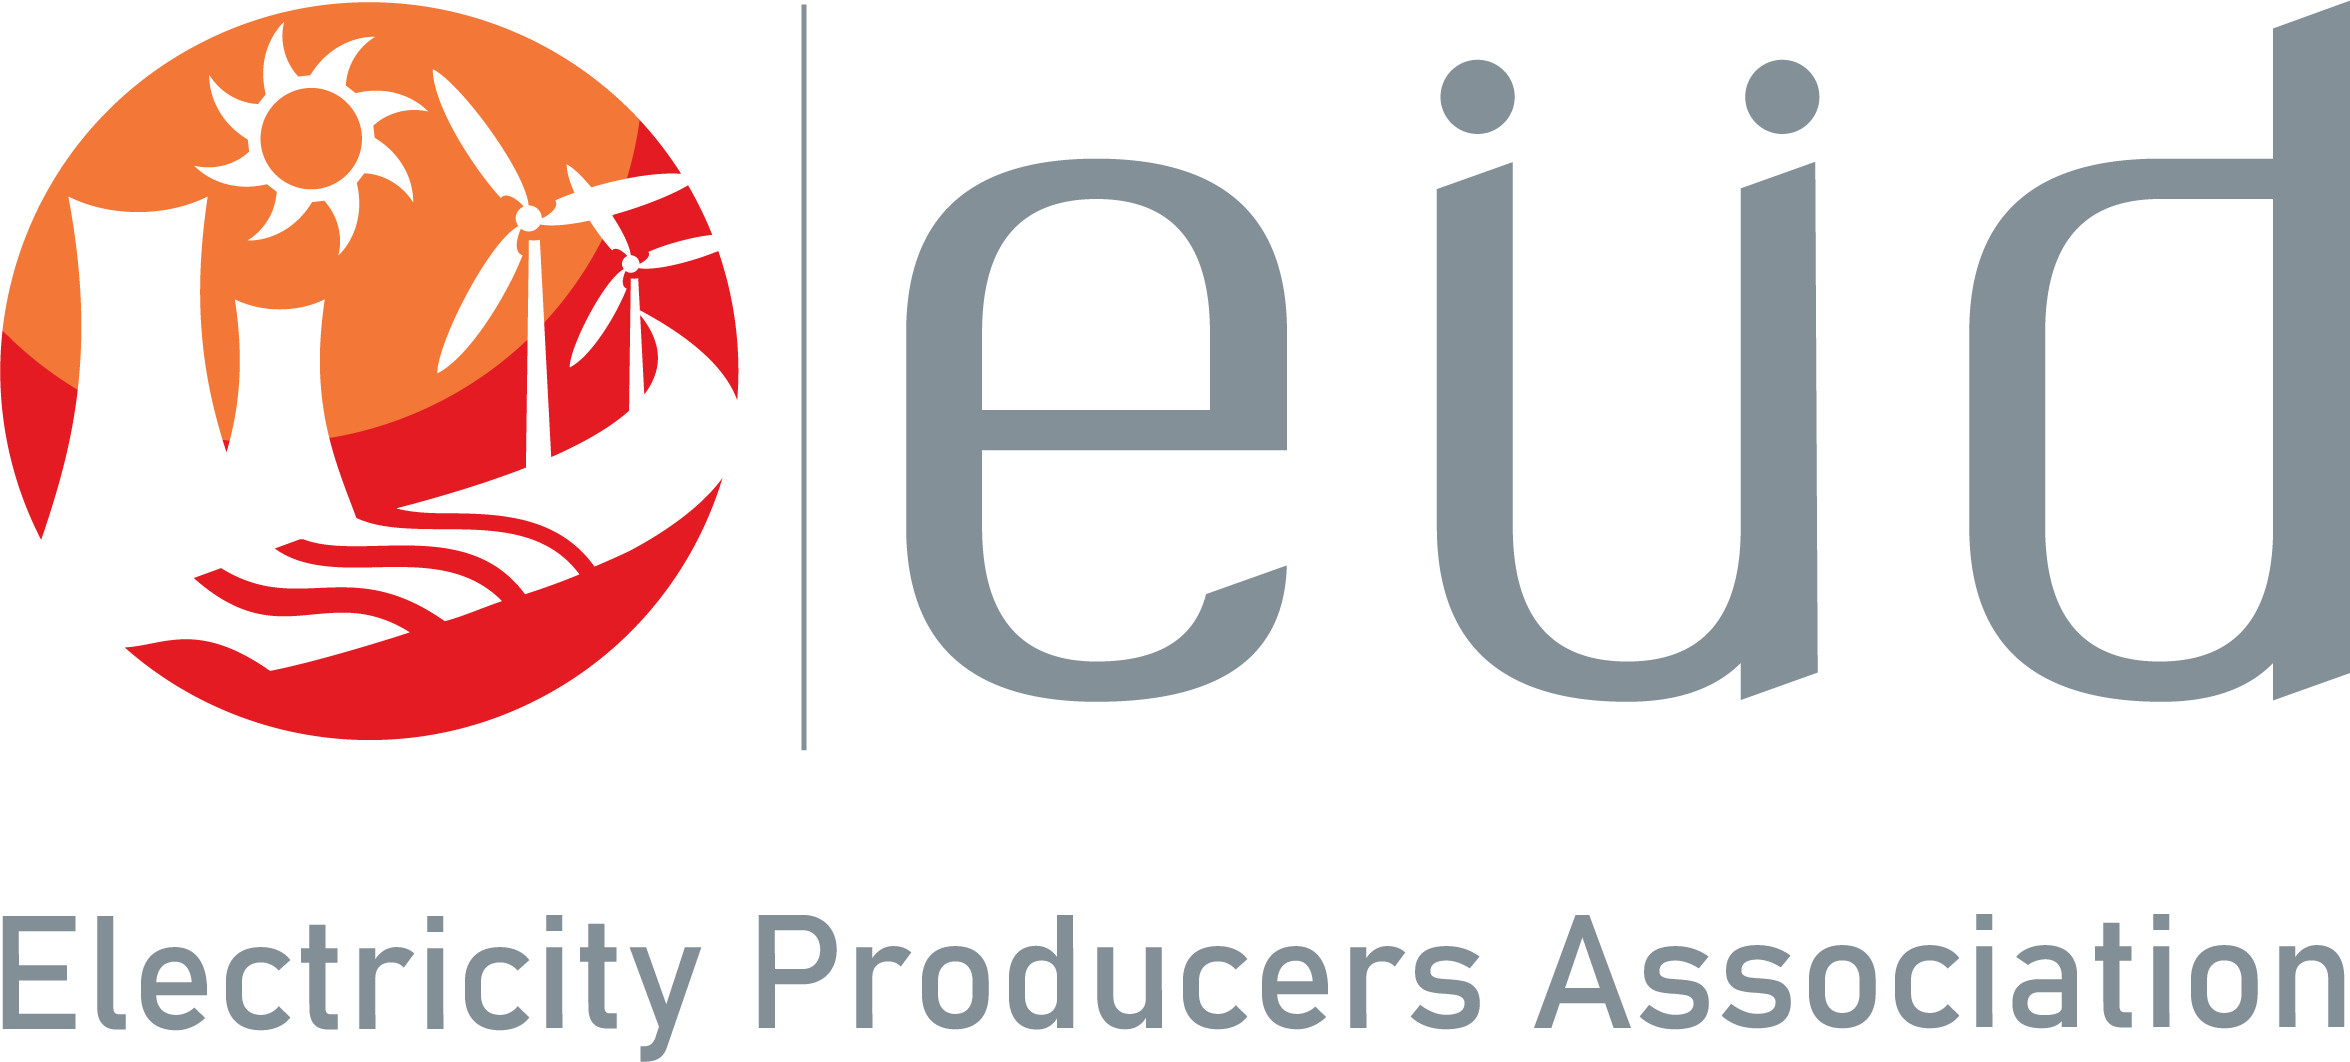 Electricity Producers Association